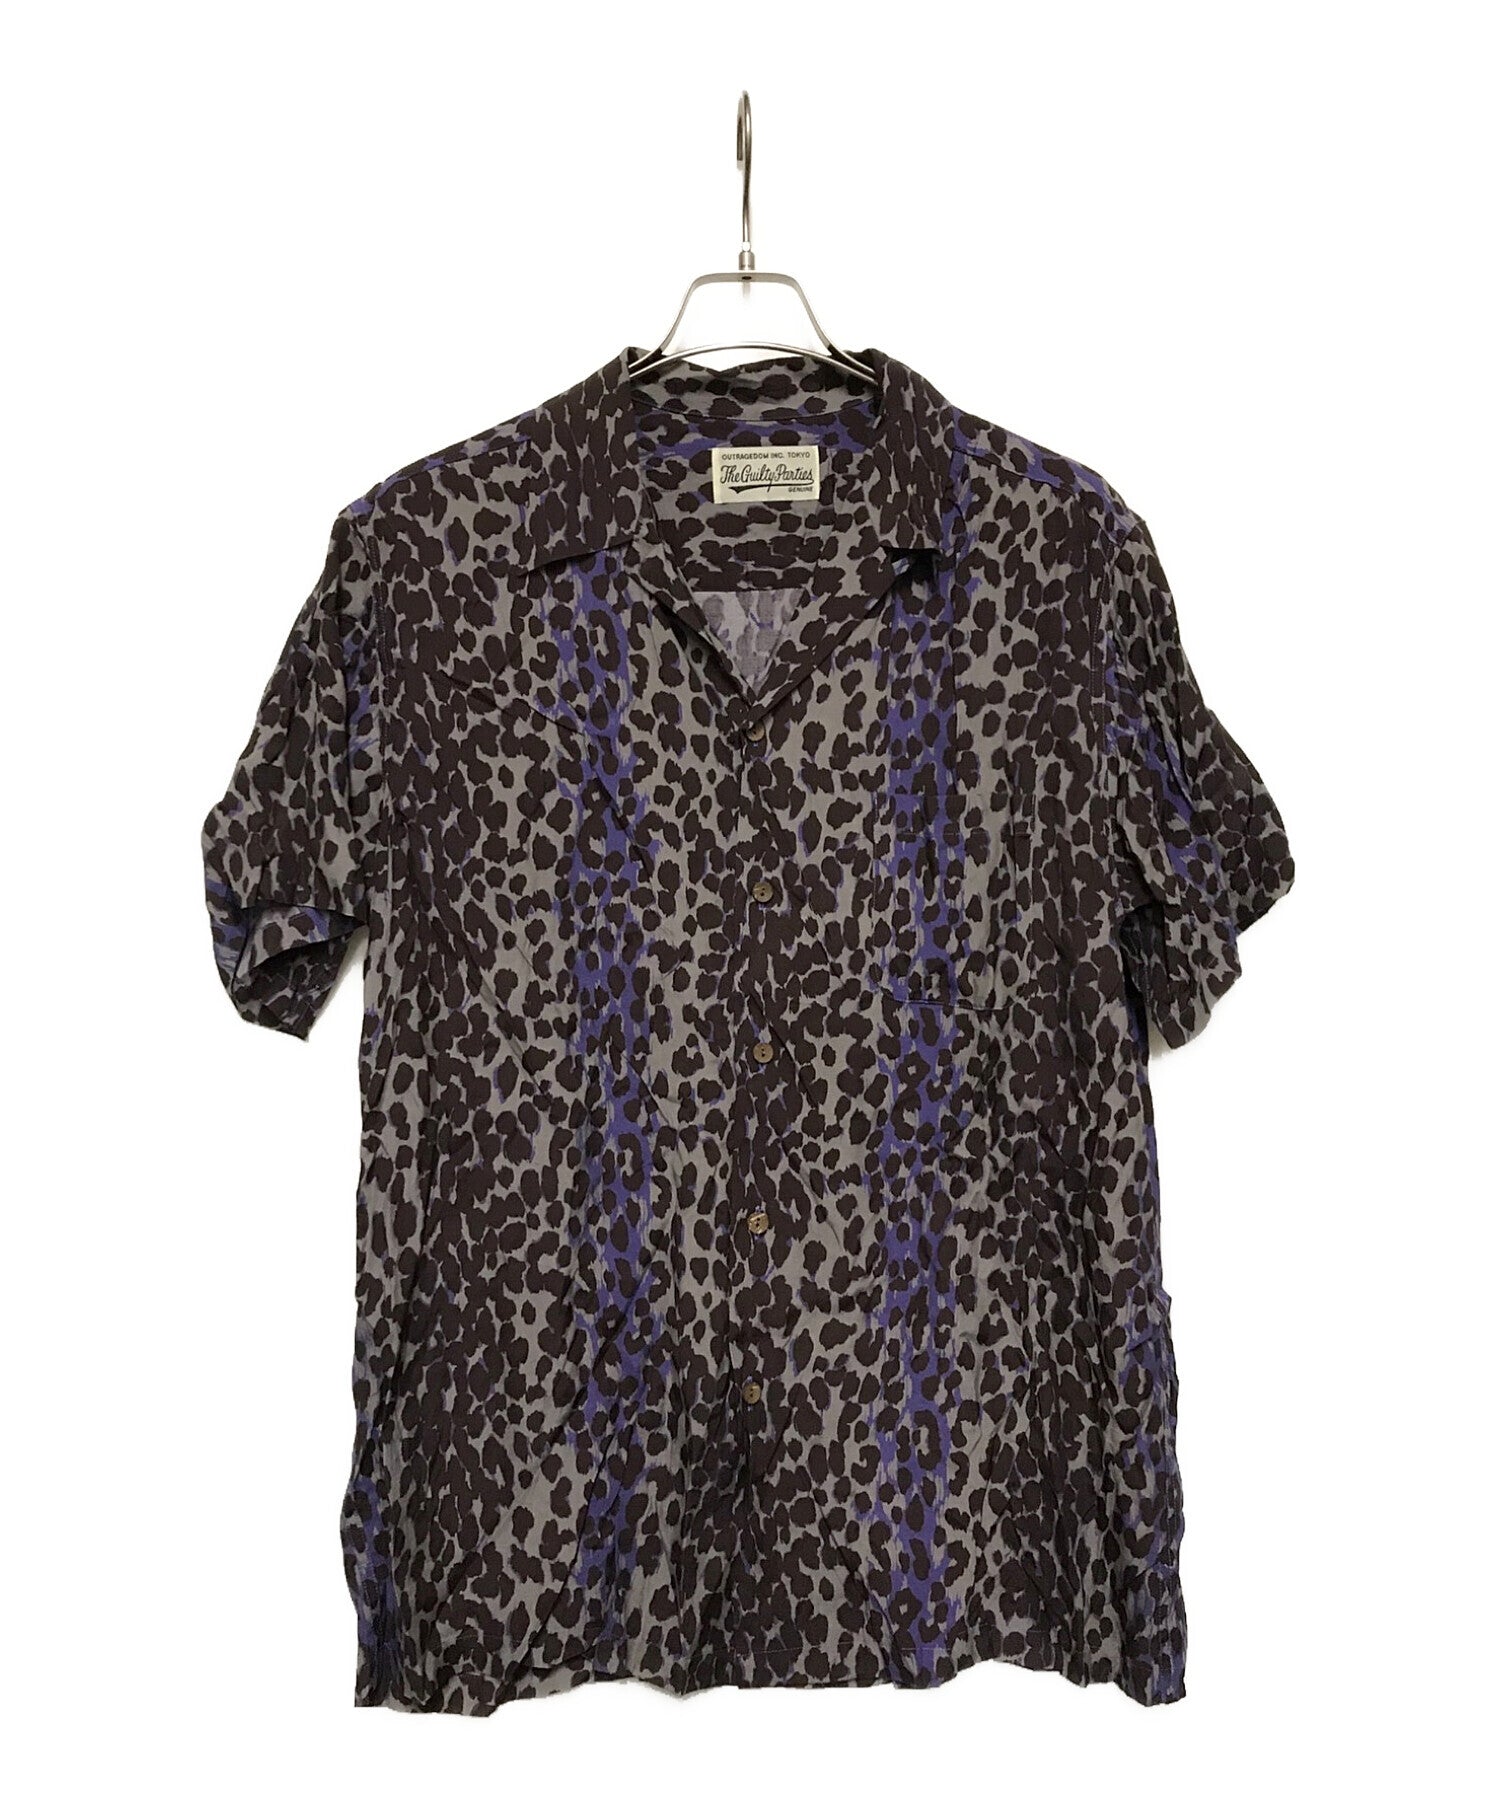 WACKO MARIA Leopard Hawaiian shirt Open collar shirt | Archive Factory